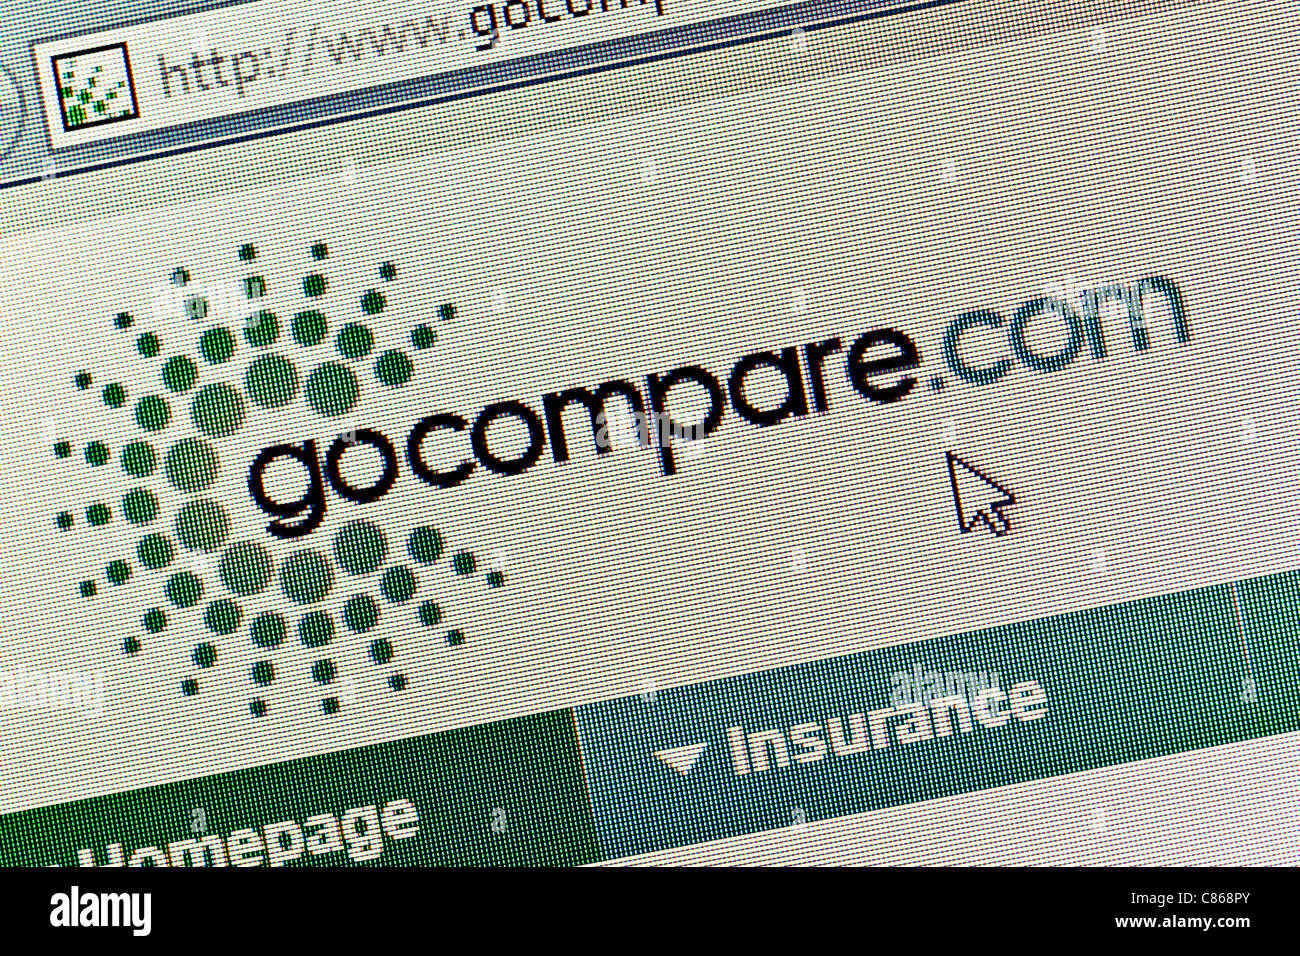 Go Compare online comparison website logo and website close up Stock Photo